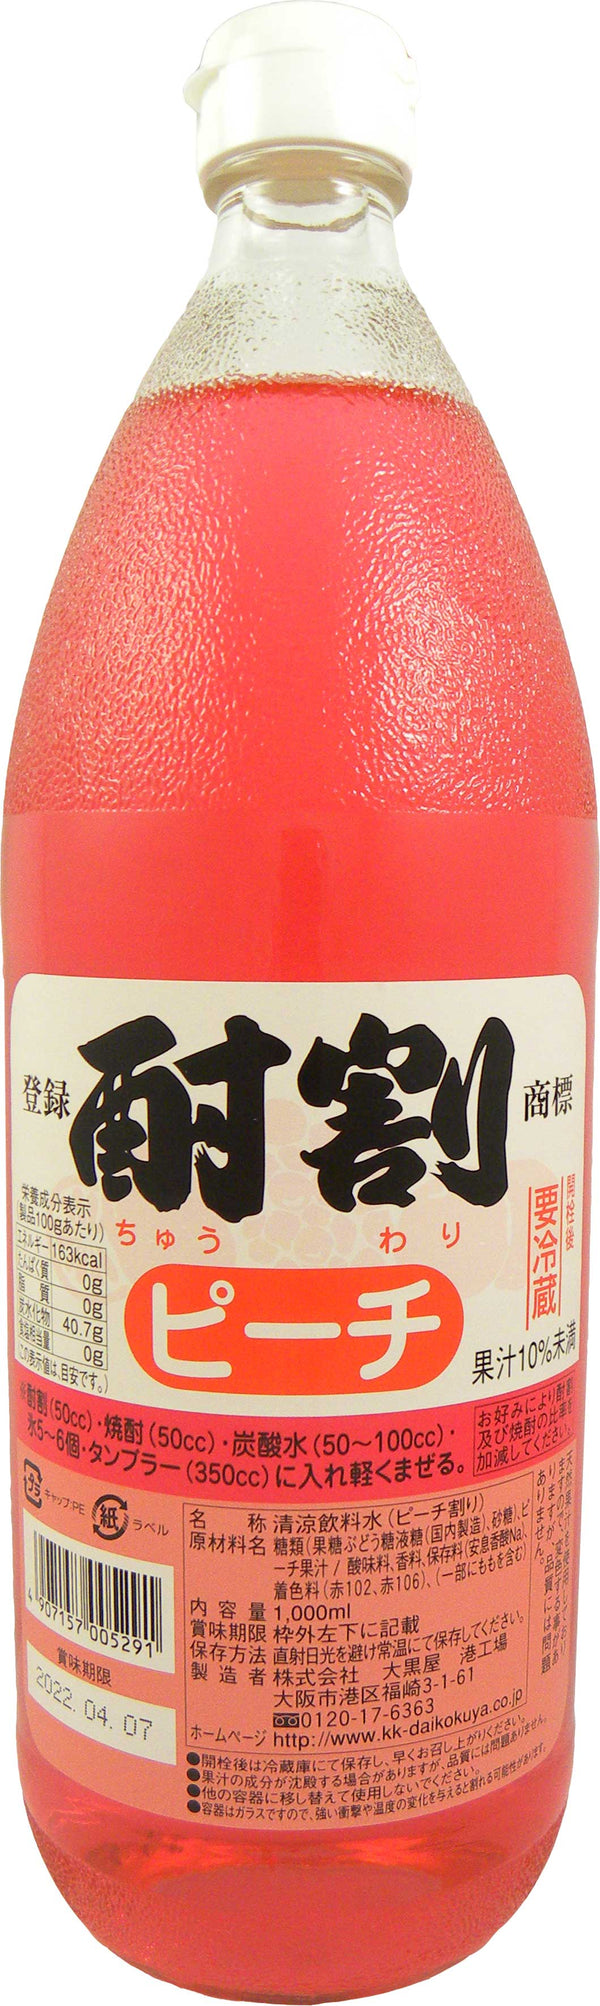 Daikokuya Chuwari Peach 1L Bottle Syrup for Commercial Use